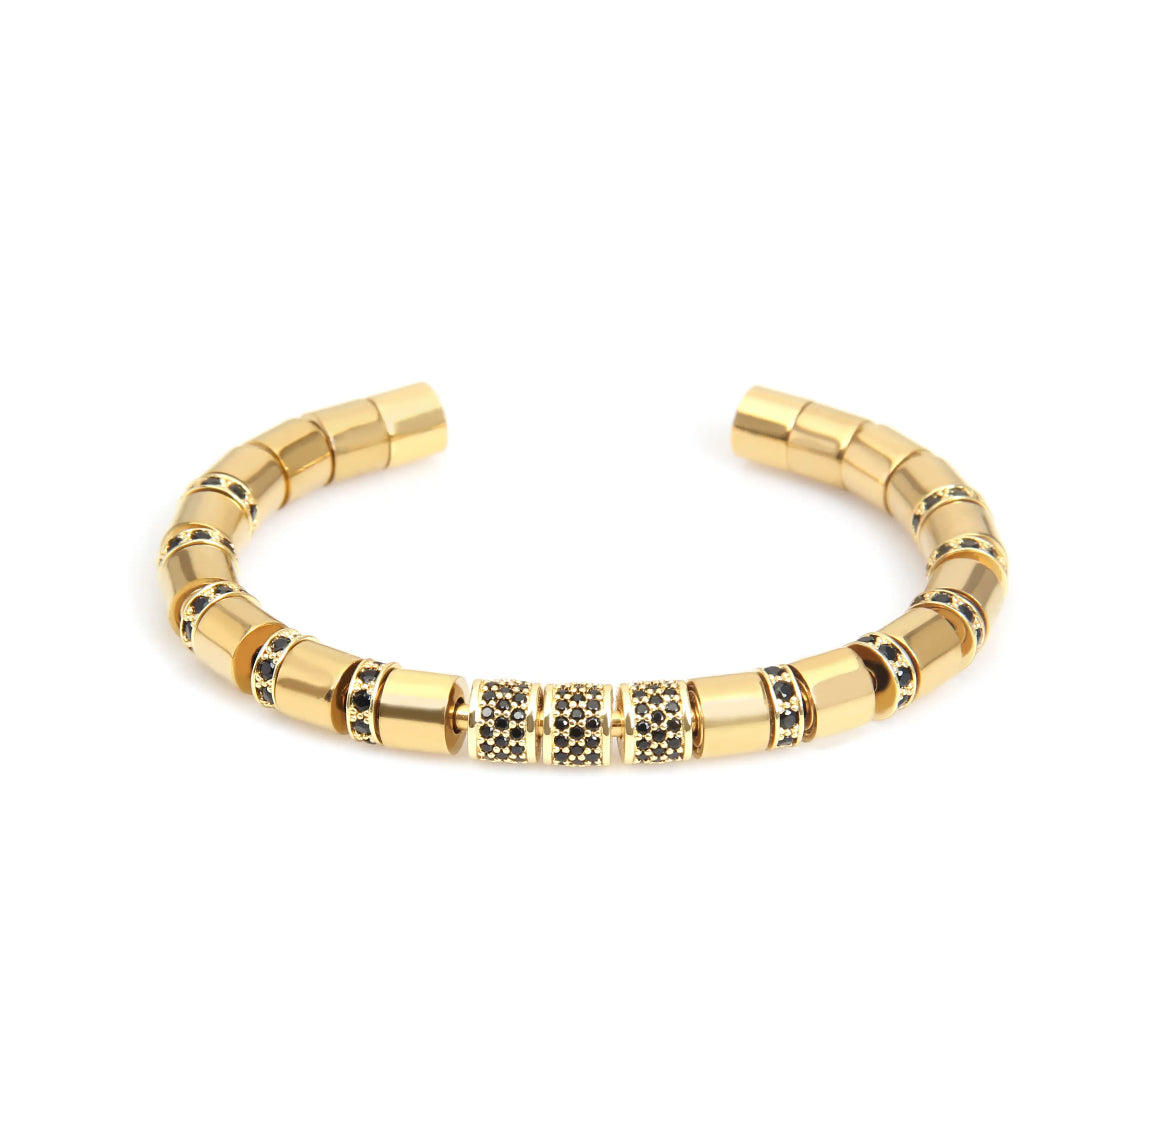 Gold Beads & Black Crystals Cuff Bracelet - My Harmony Tree